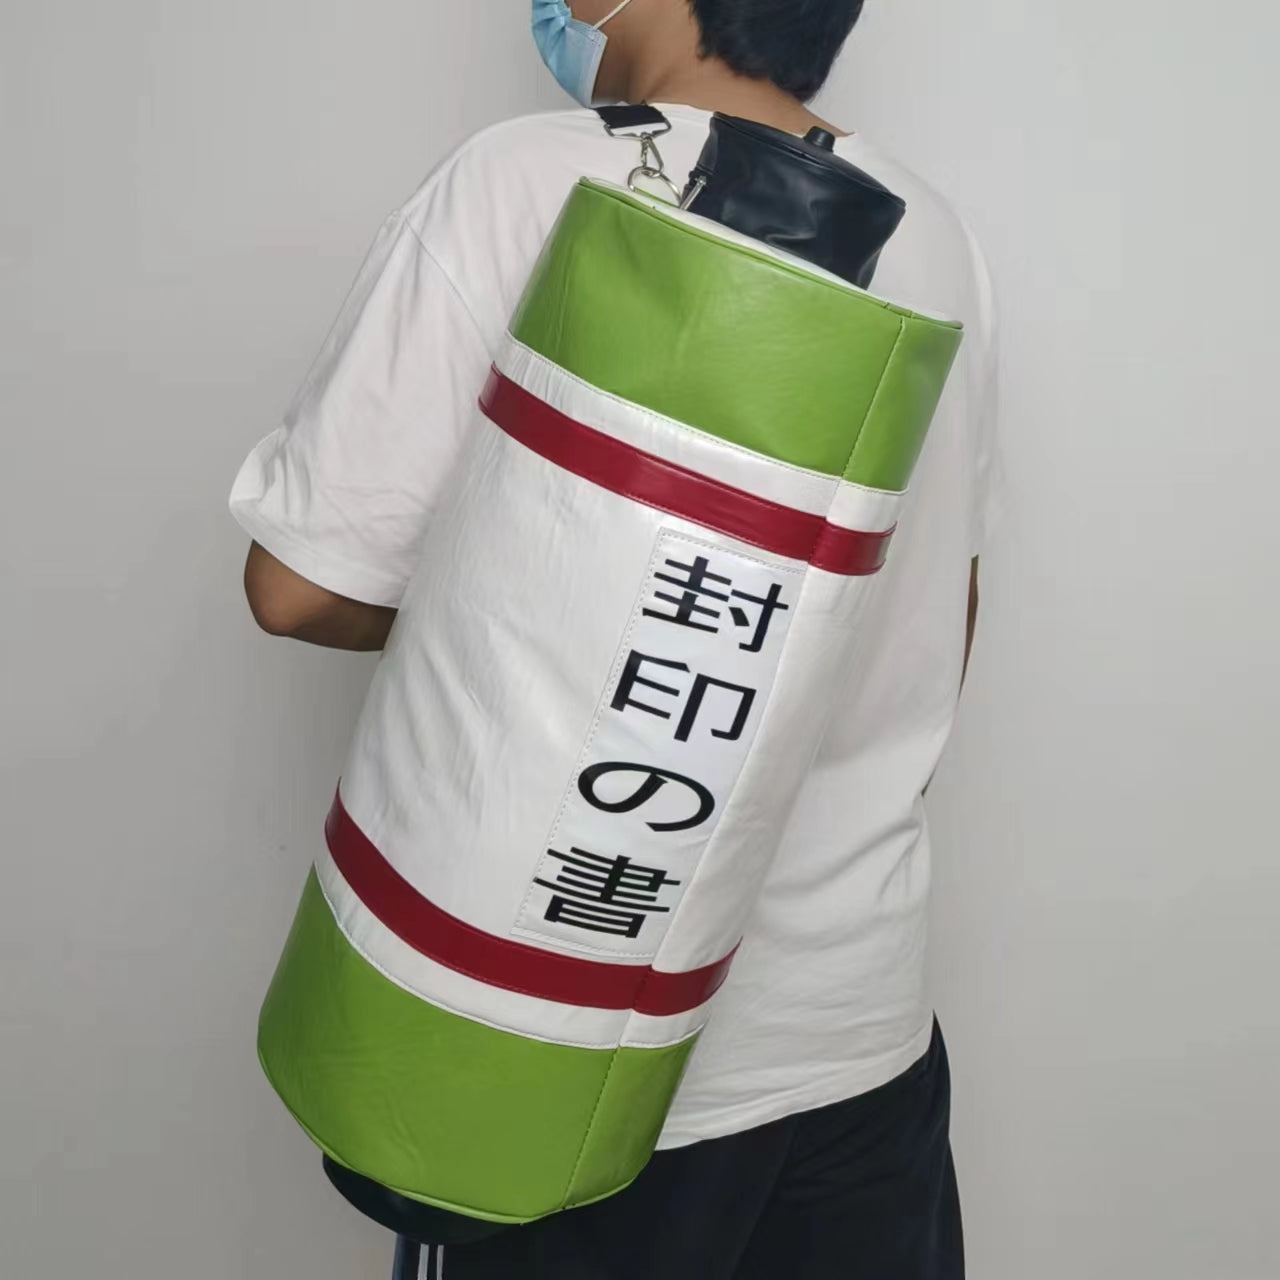 Kurama scroll The book seal large body bag boys large bag waterproof body bag